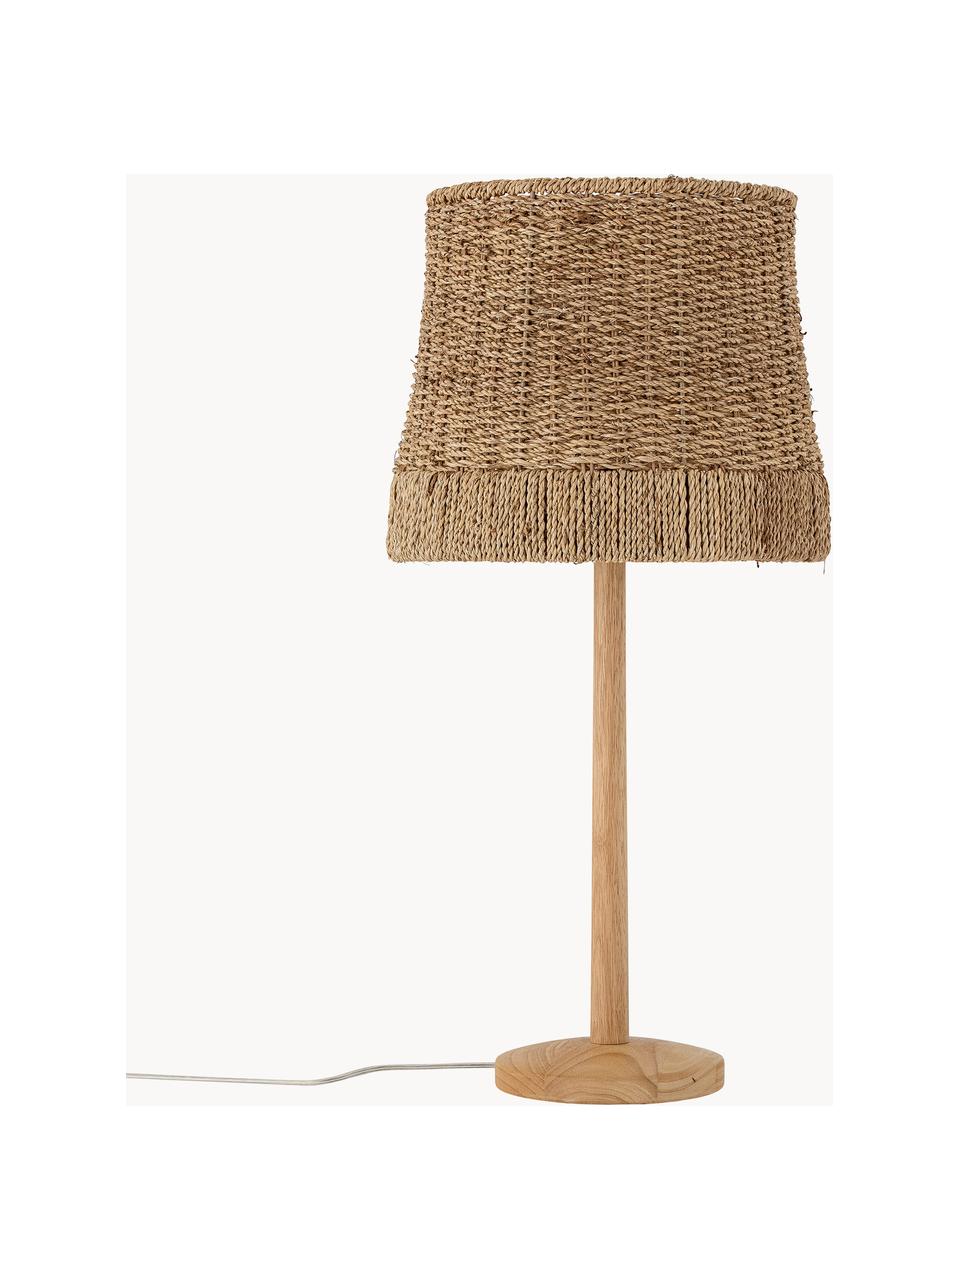 Lámpara de mesa grande de ratán Kakasi, Pantalla: ratán, Cable: cubierto en tela, Ratán, madera de caucho, Ø 28 x Al 69 cm